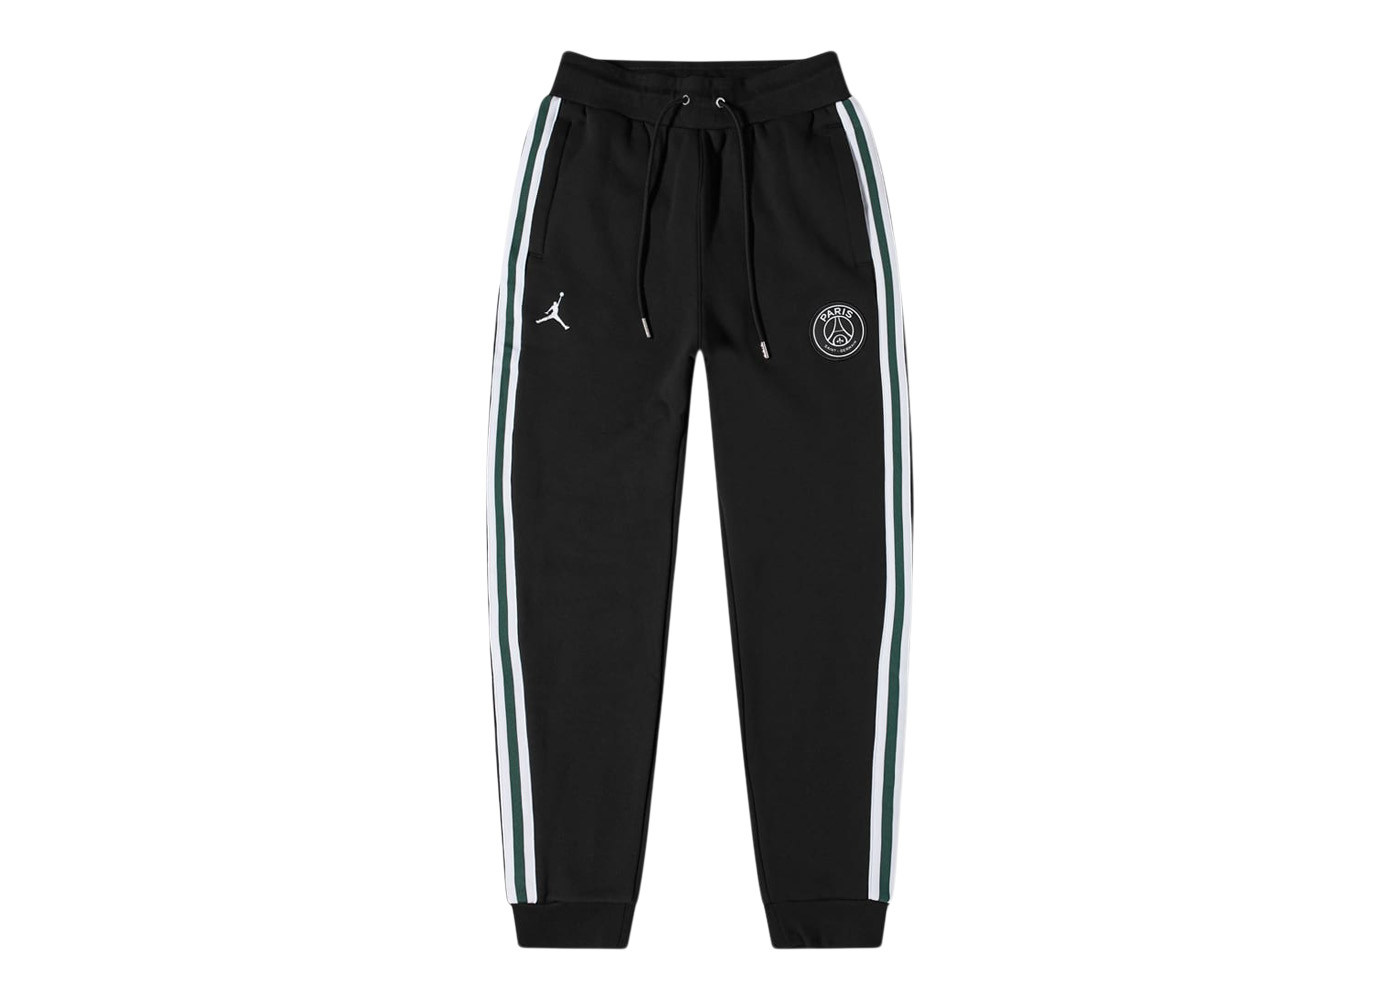 Jordan x PSG Paris Saint Germain Fleece Pants Black/White/Green